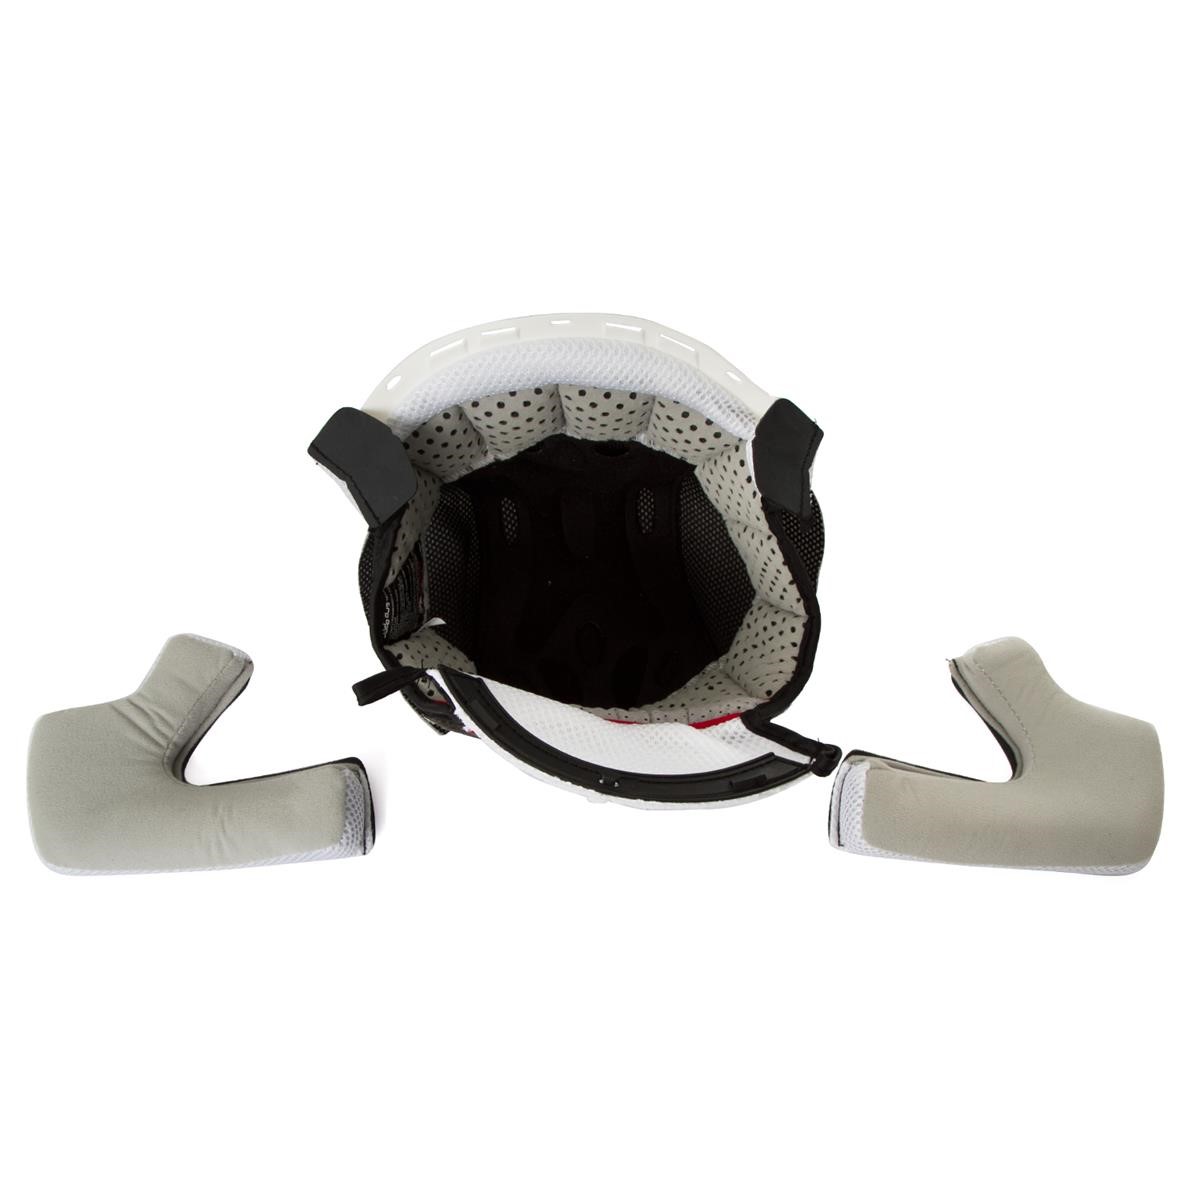 Image result for helmet pad